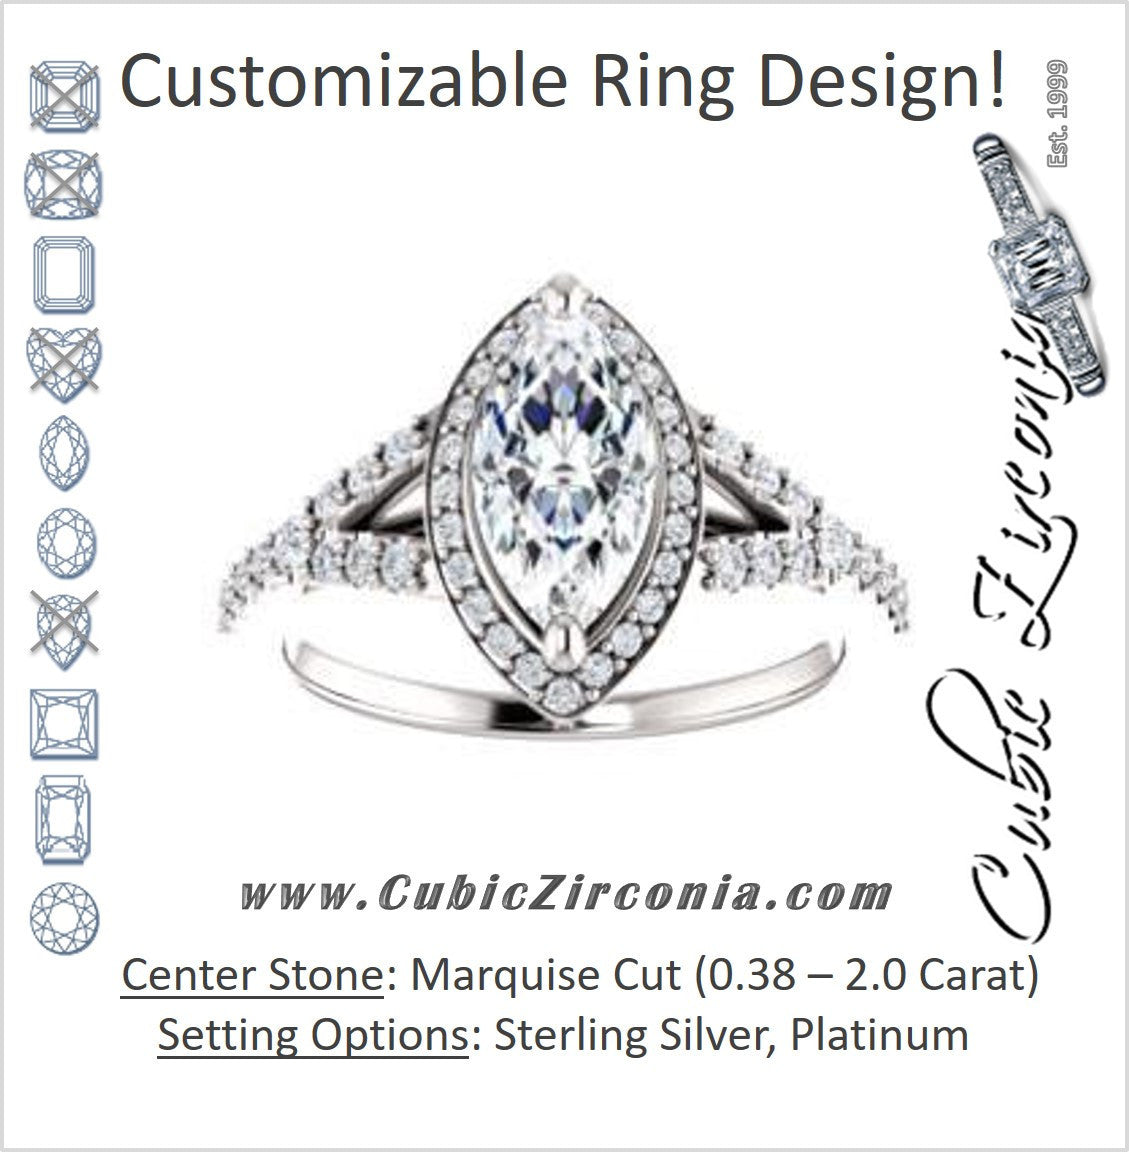 Floral platinum ring with marquise cut diamonds | Jon Dibben